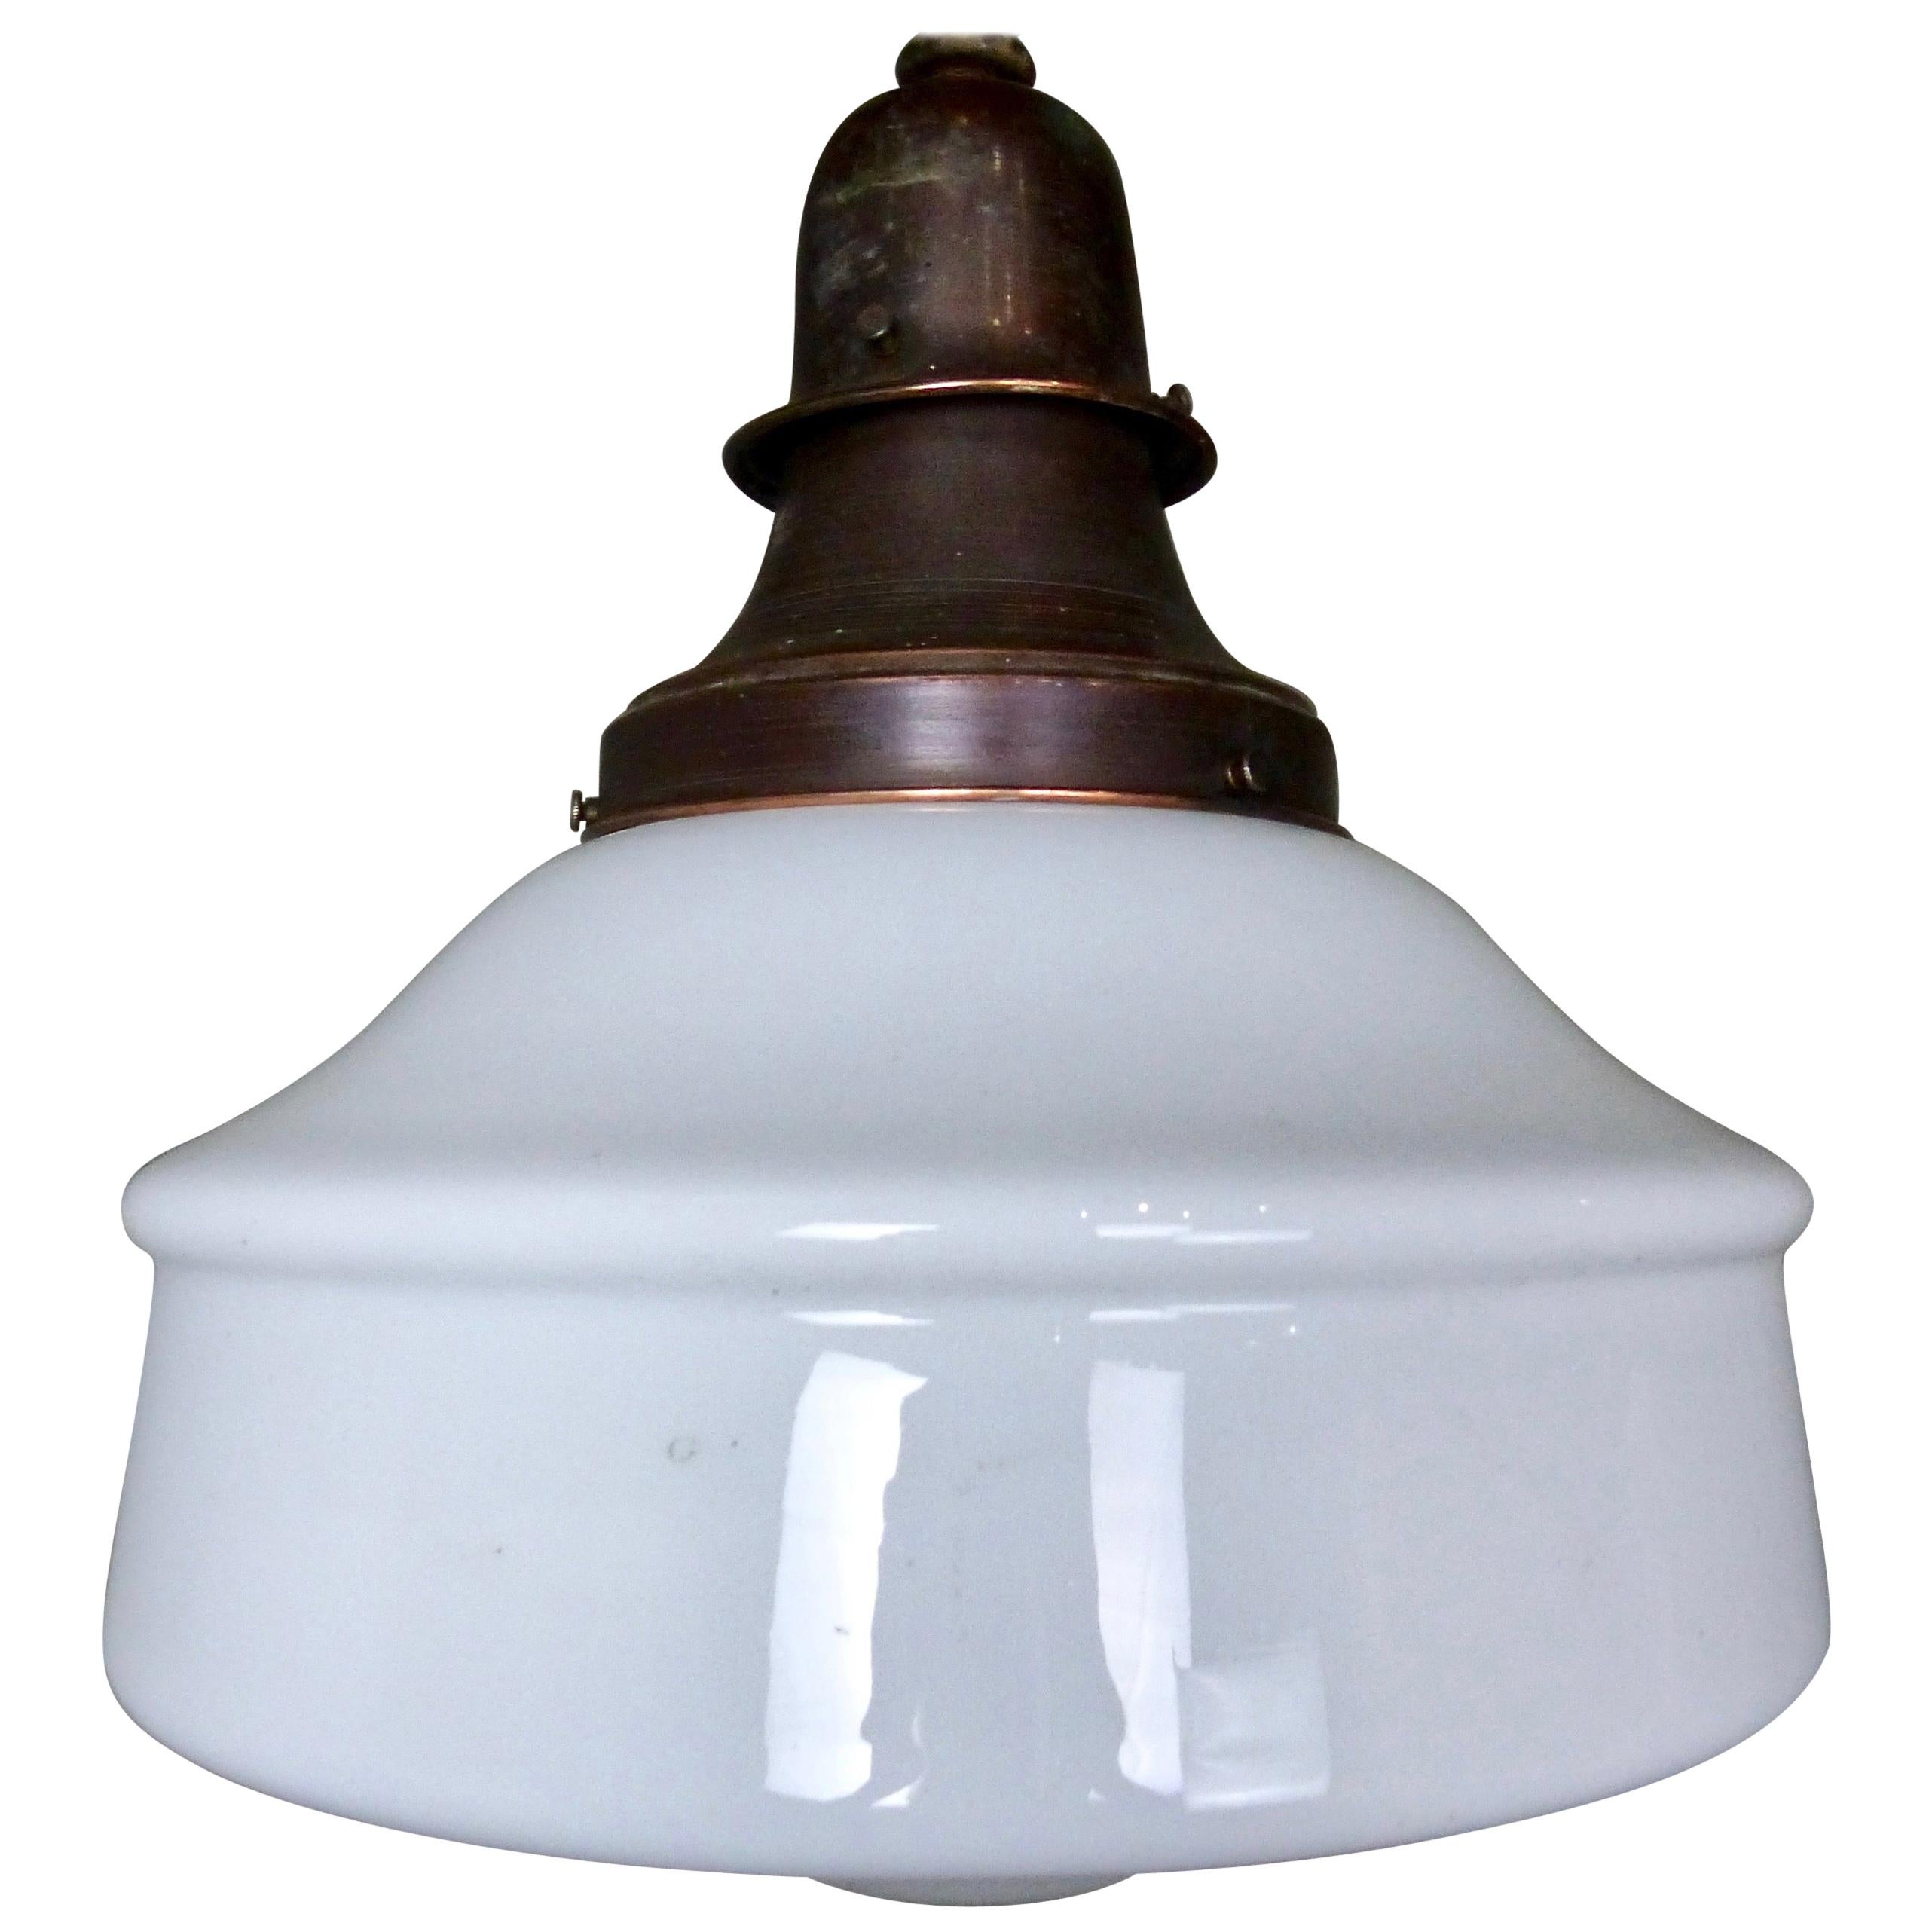 Set of four 1920 Copper Schoolhouse Milk Glass Pendant Lights